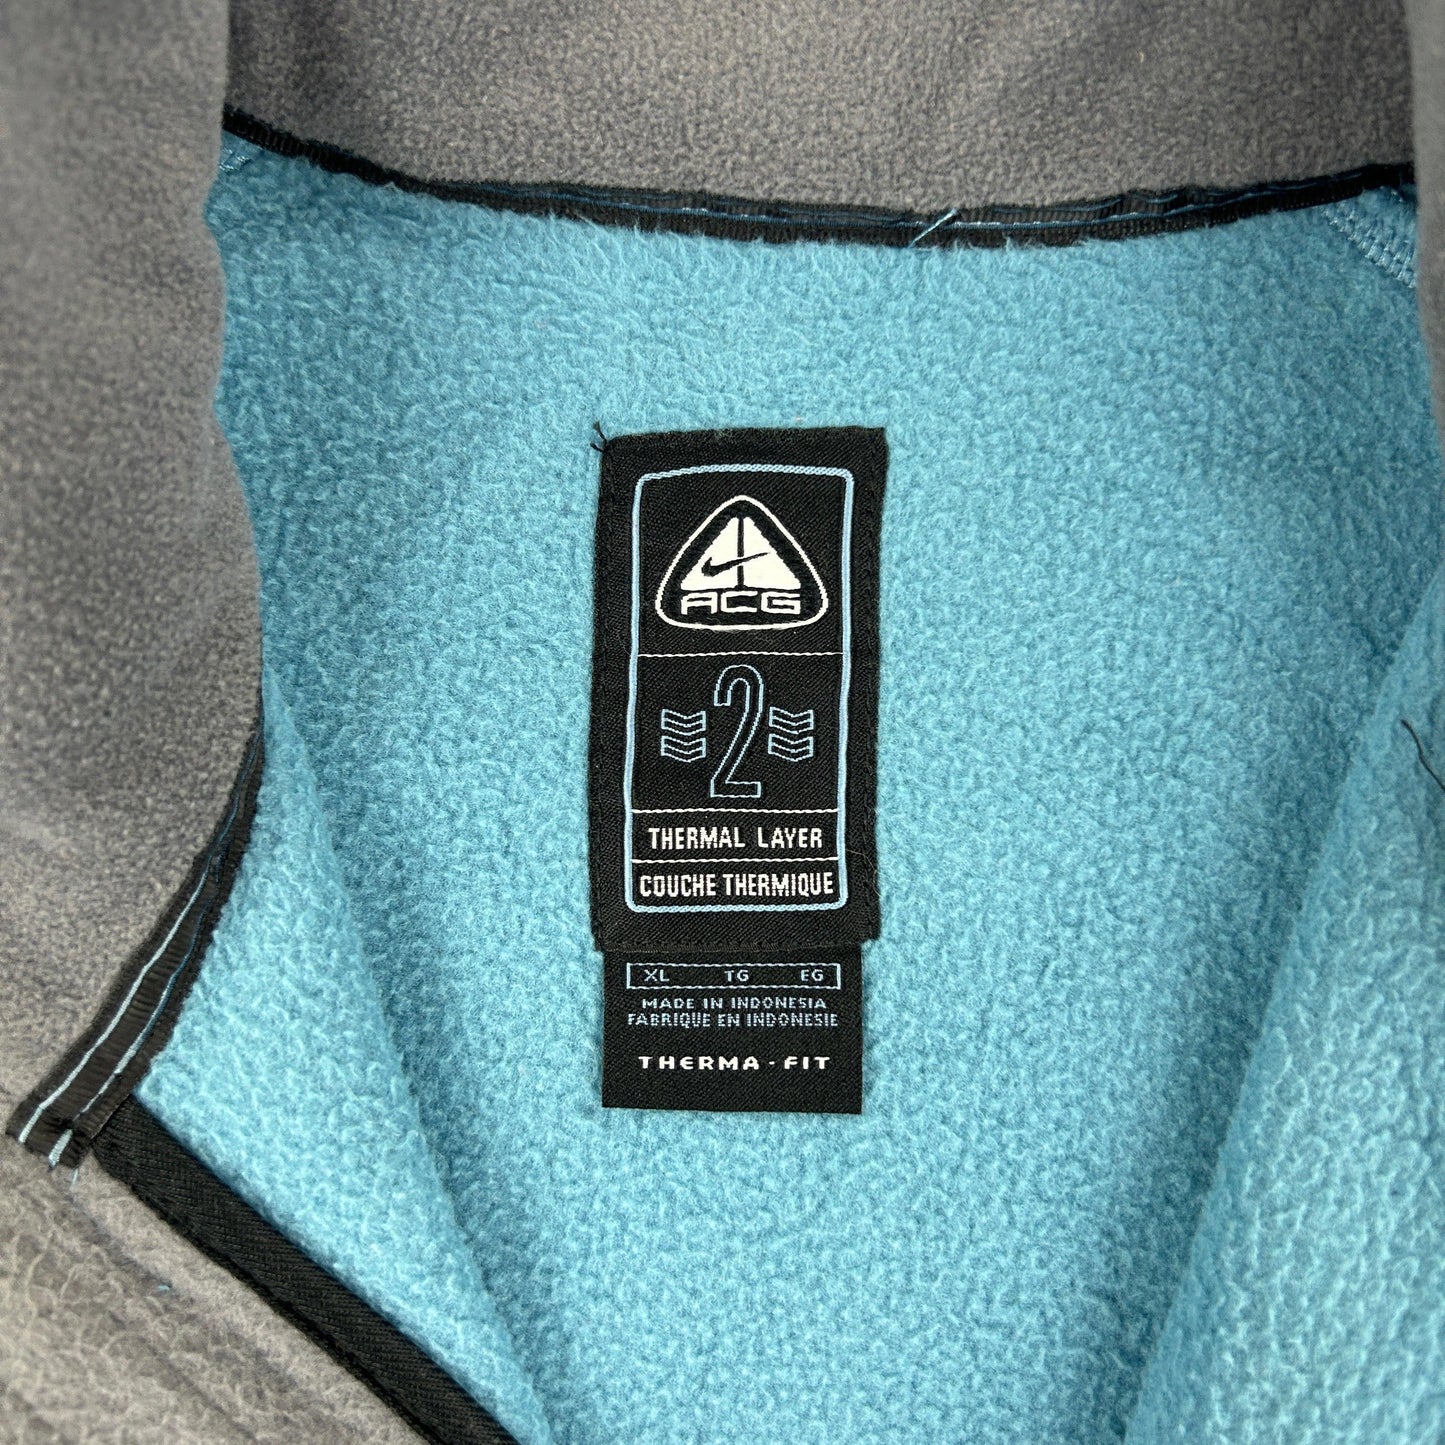 Vintage Nike ACG Fleece Jacket Size XL - Known Source